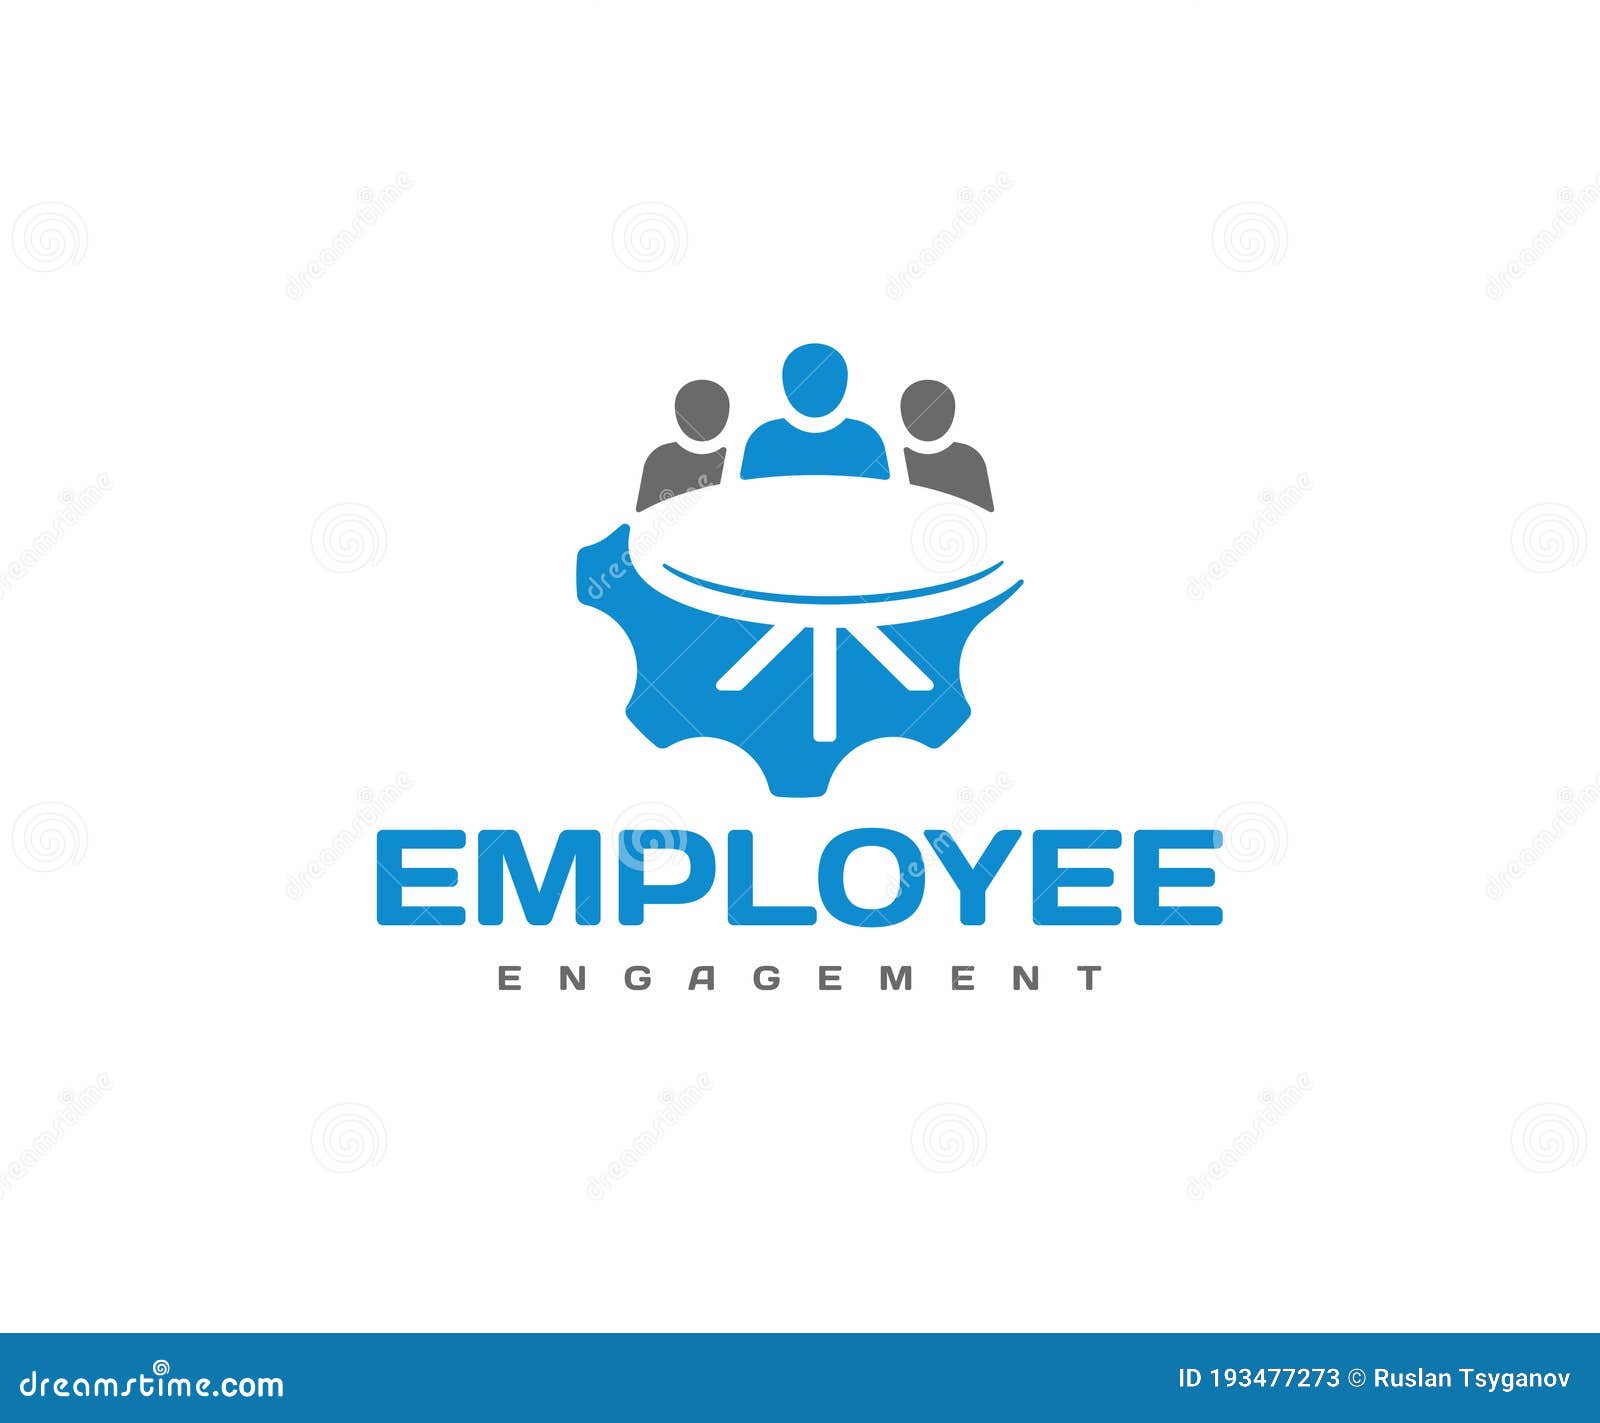 Discover 121+ employee logo best - camera.edu.vn